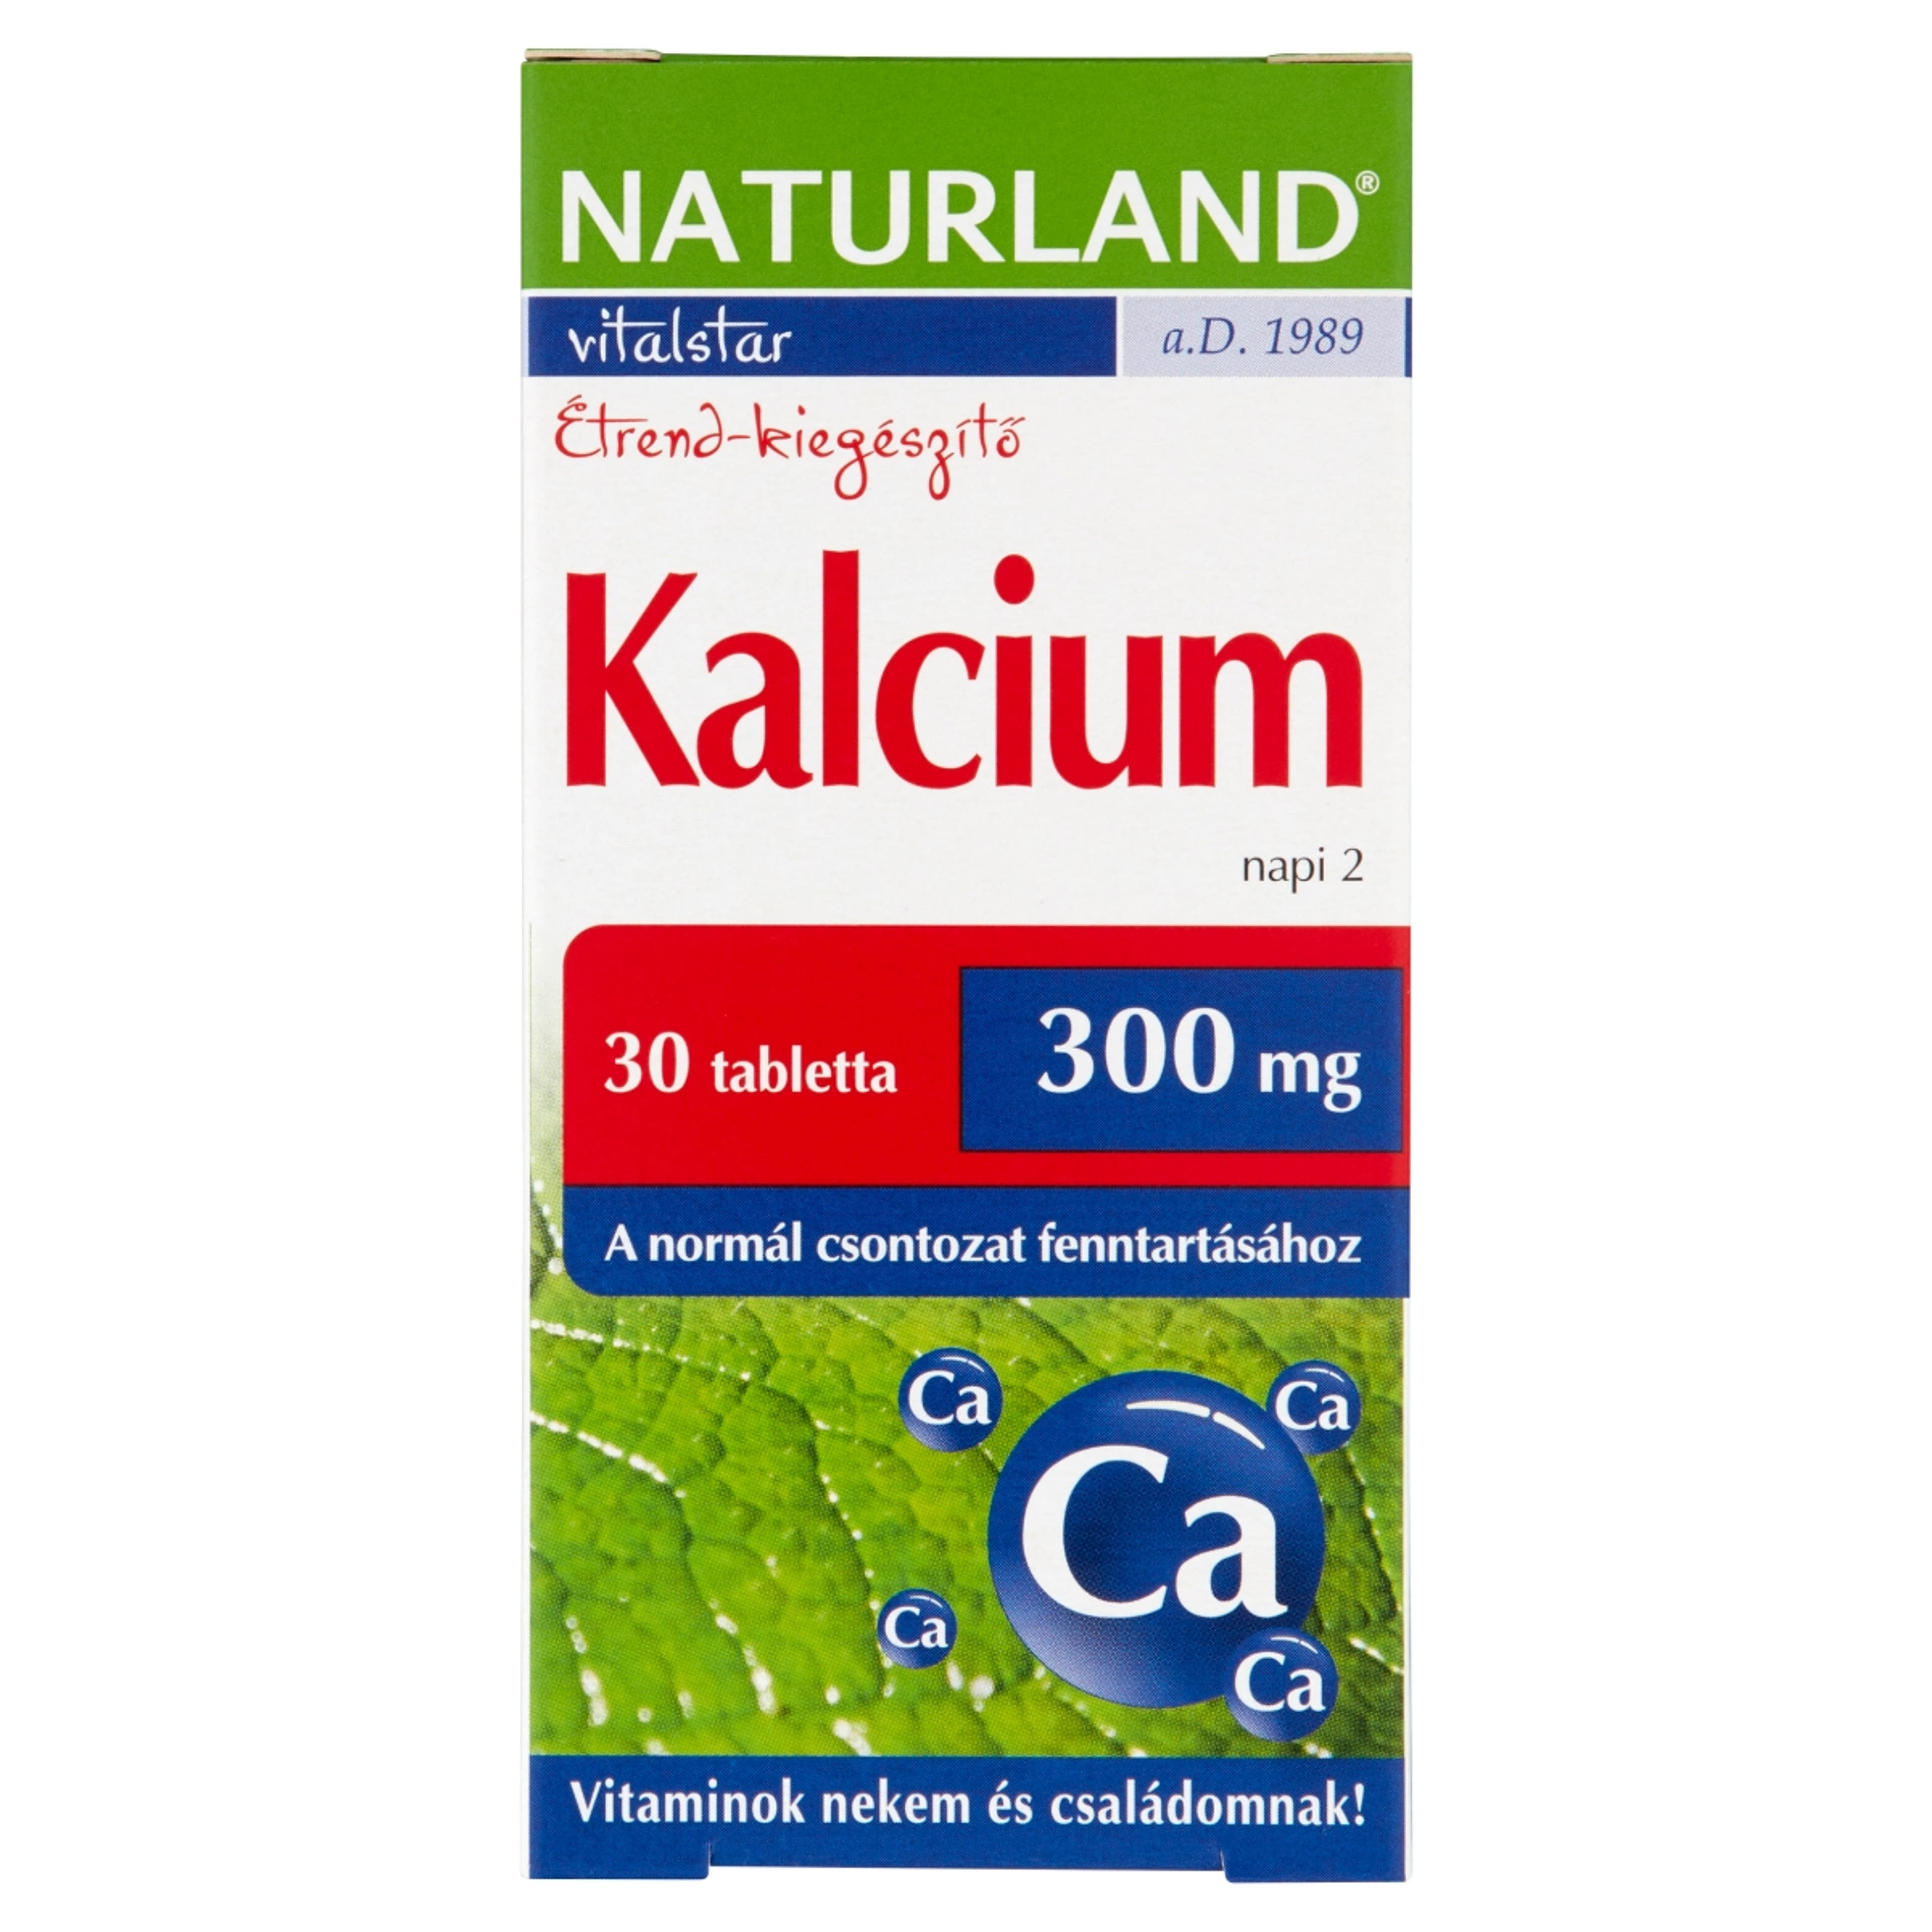 Naturland Kalcium 300mg Tabletta - 30 db-1